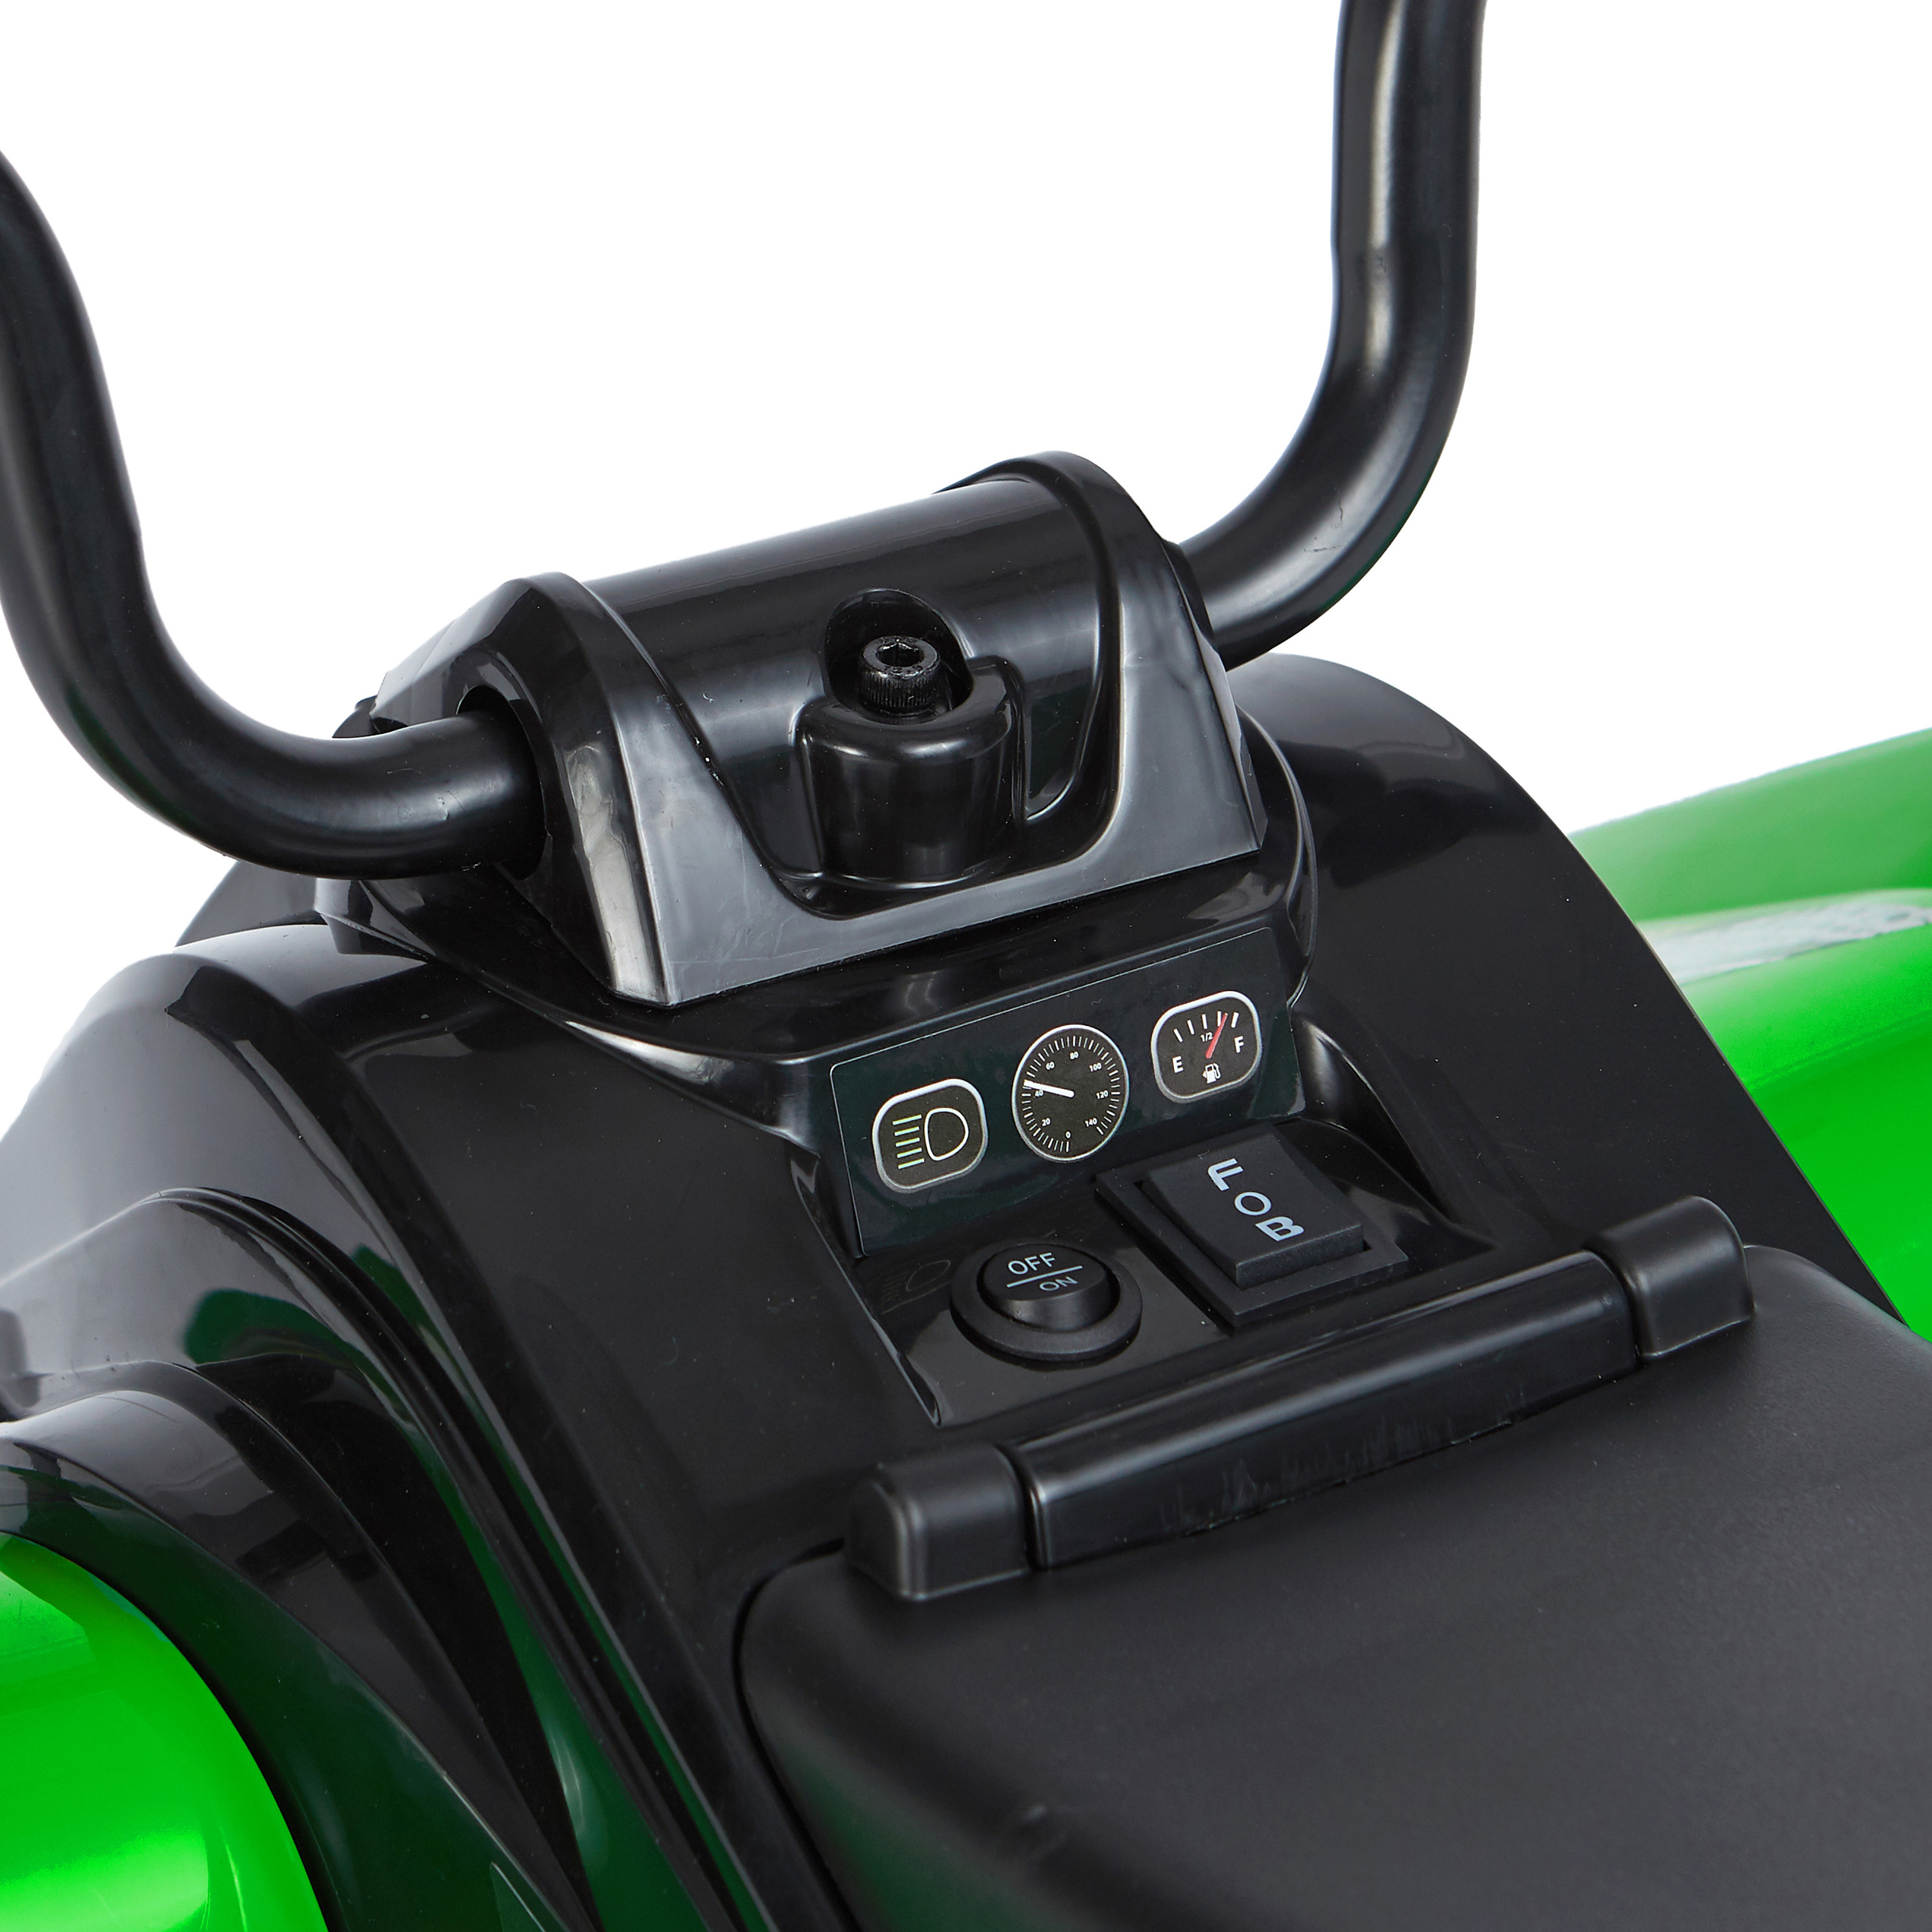 Kalee 12V Giant Quad ATV Battery Powered Ride On, Green - image 5 of 8